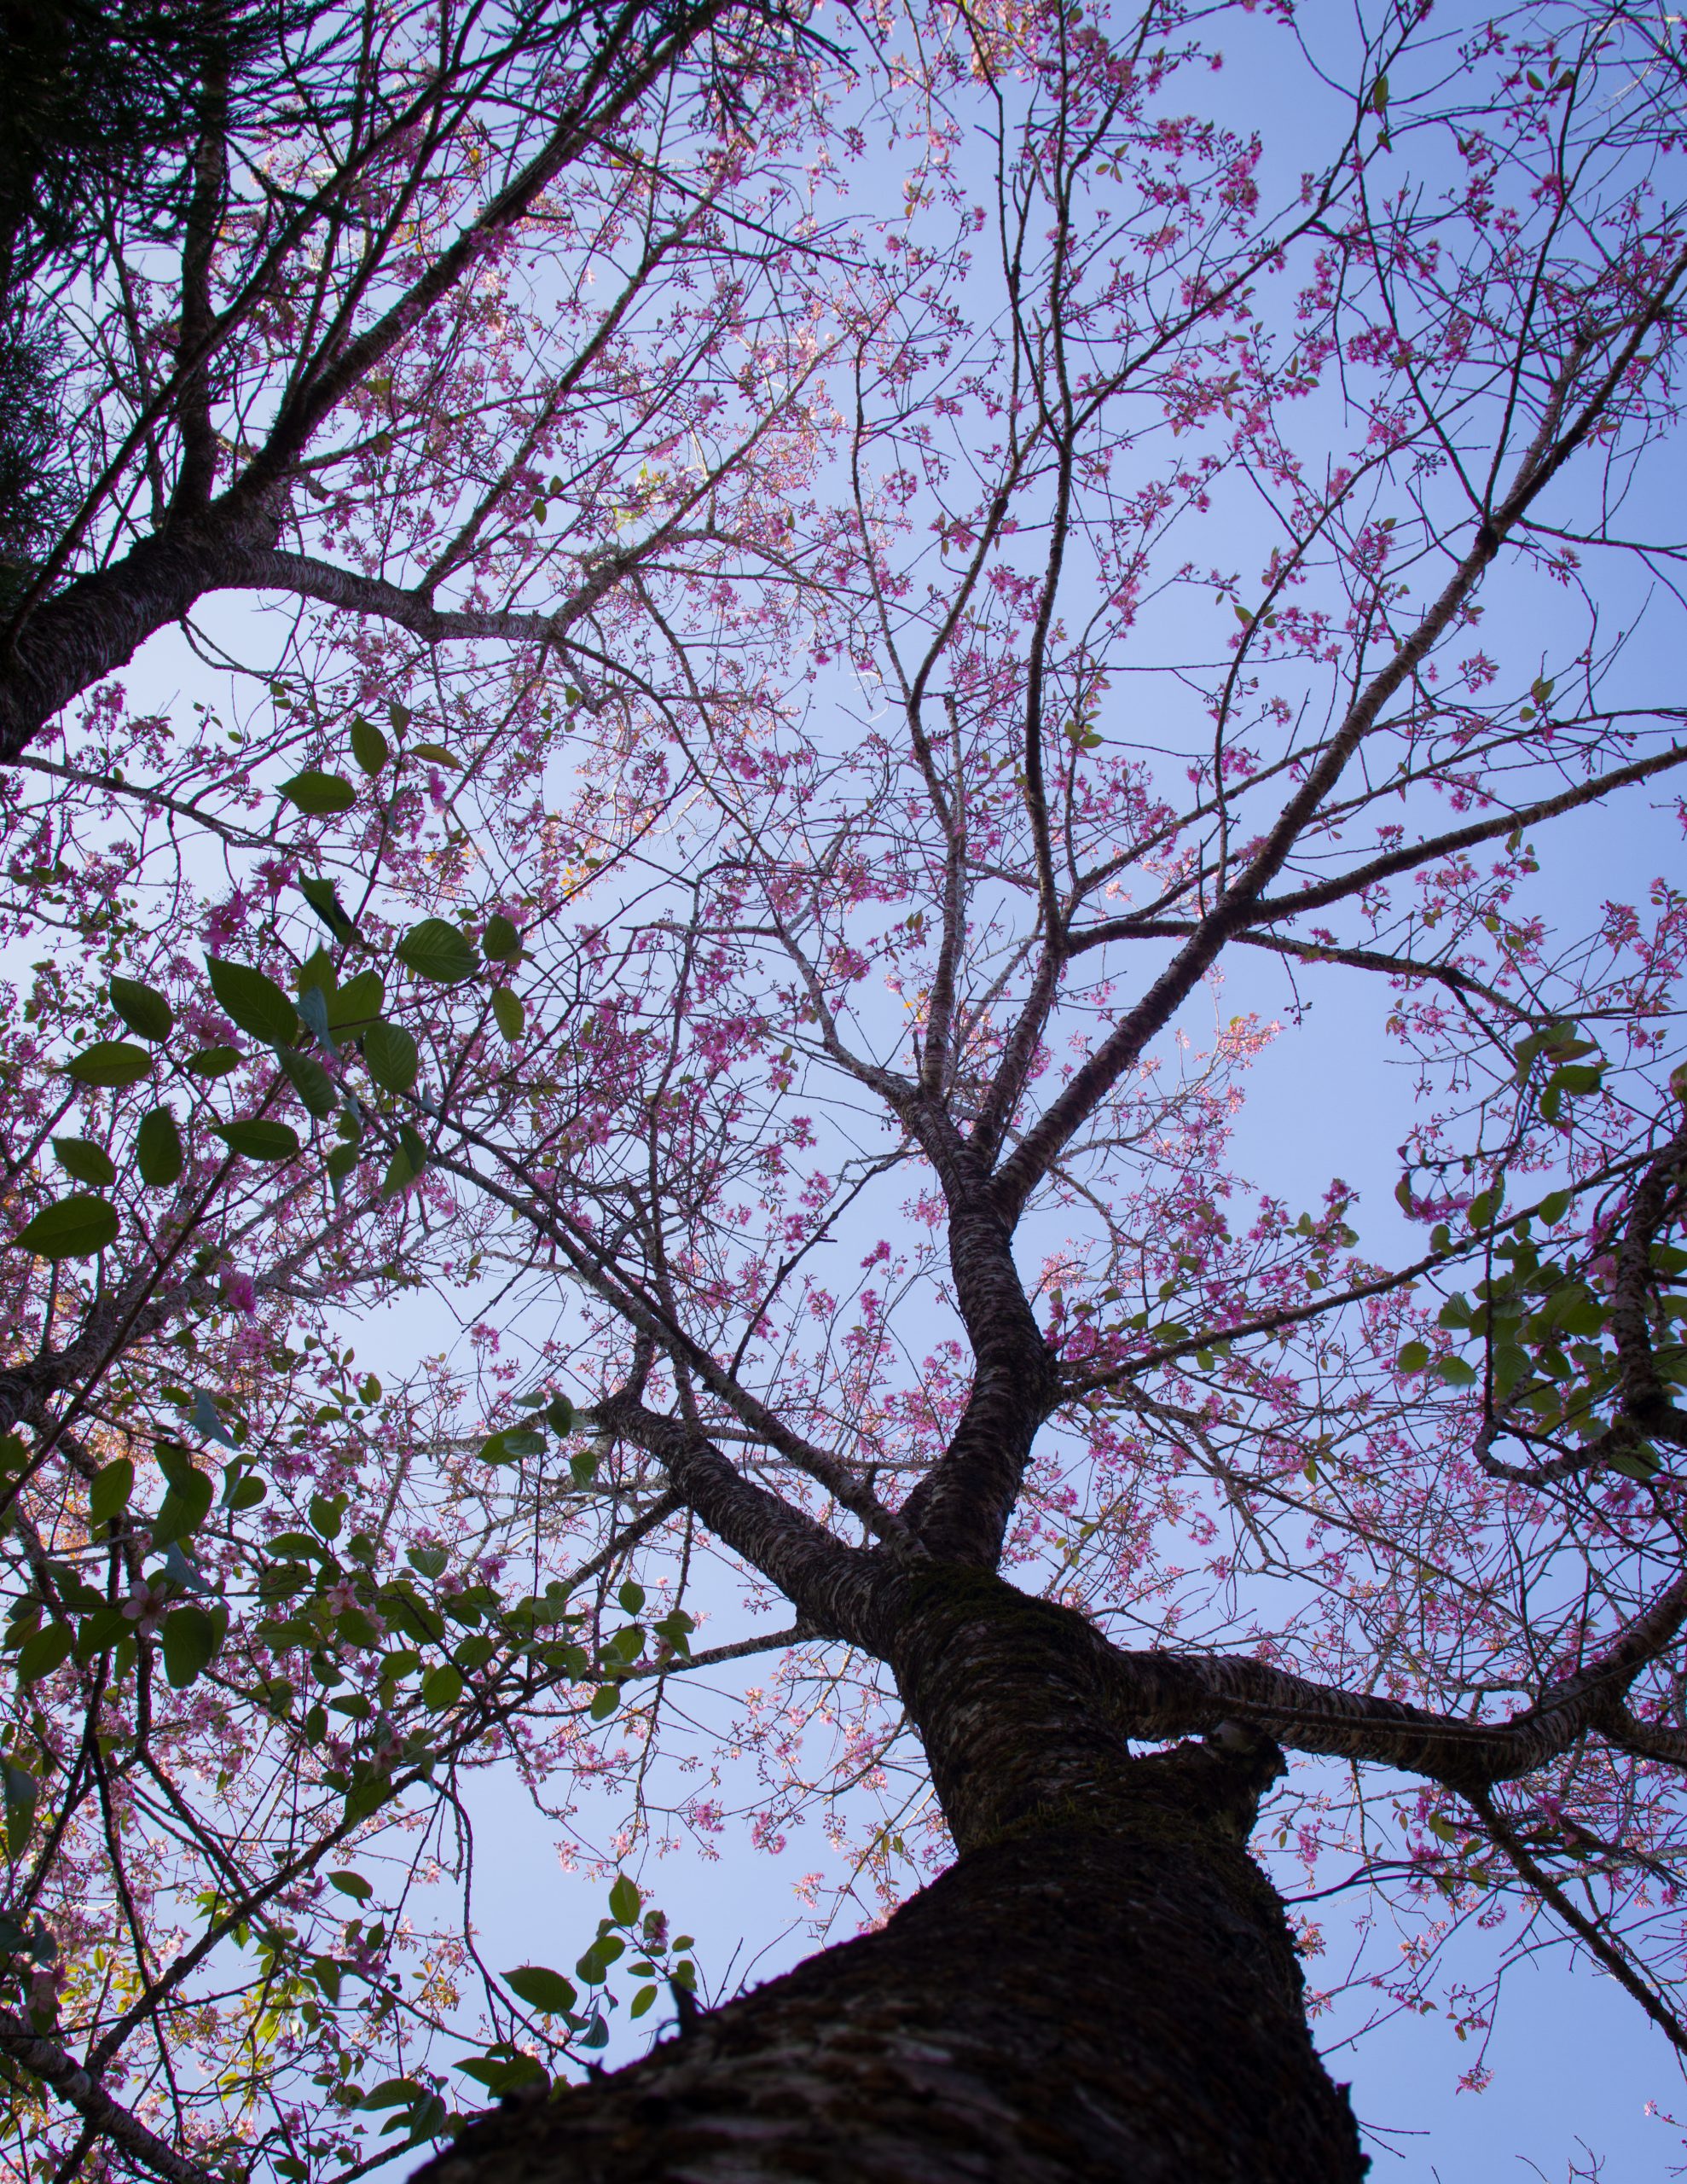 flowers on a tree